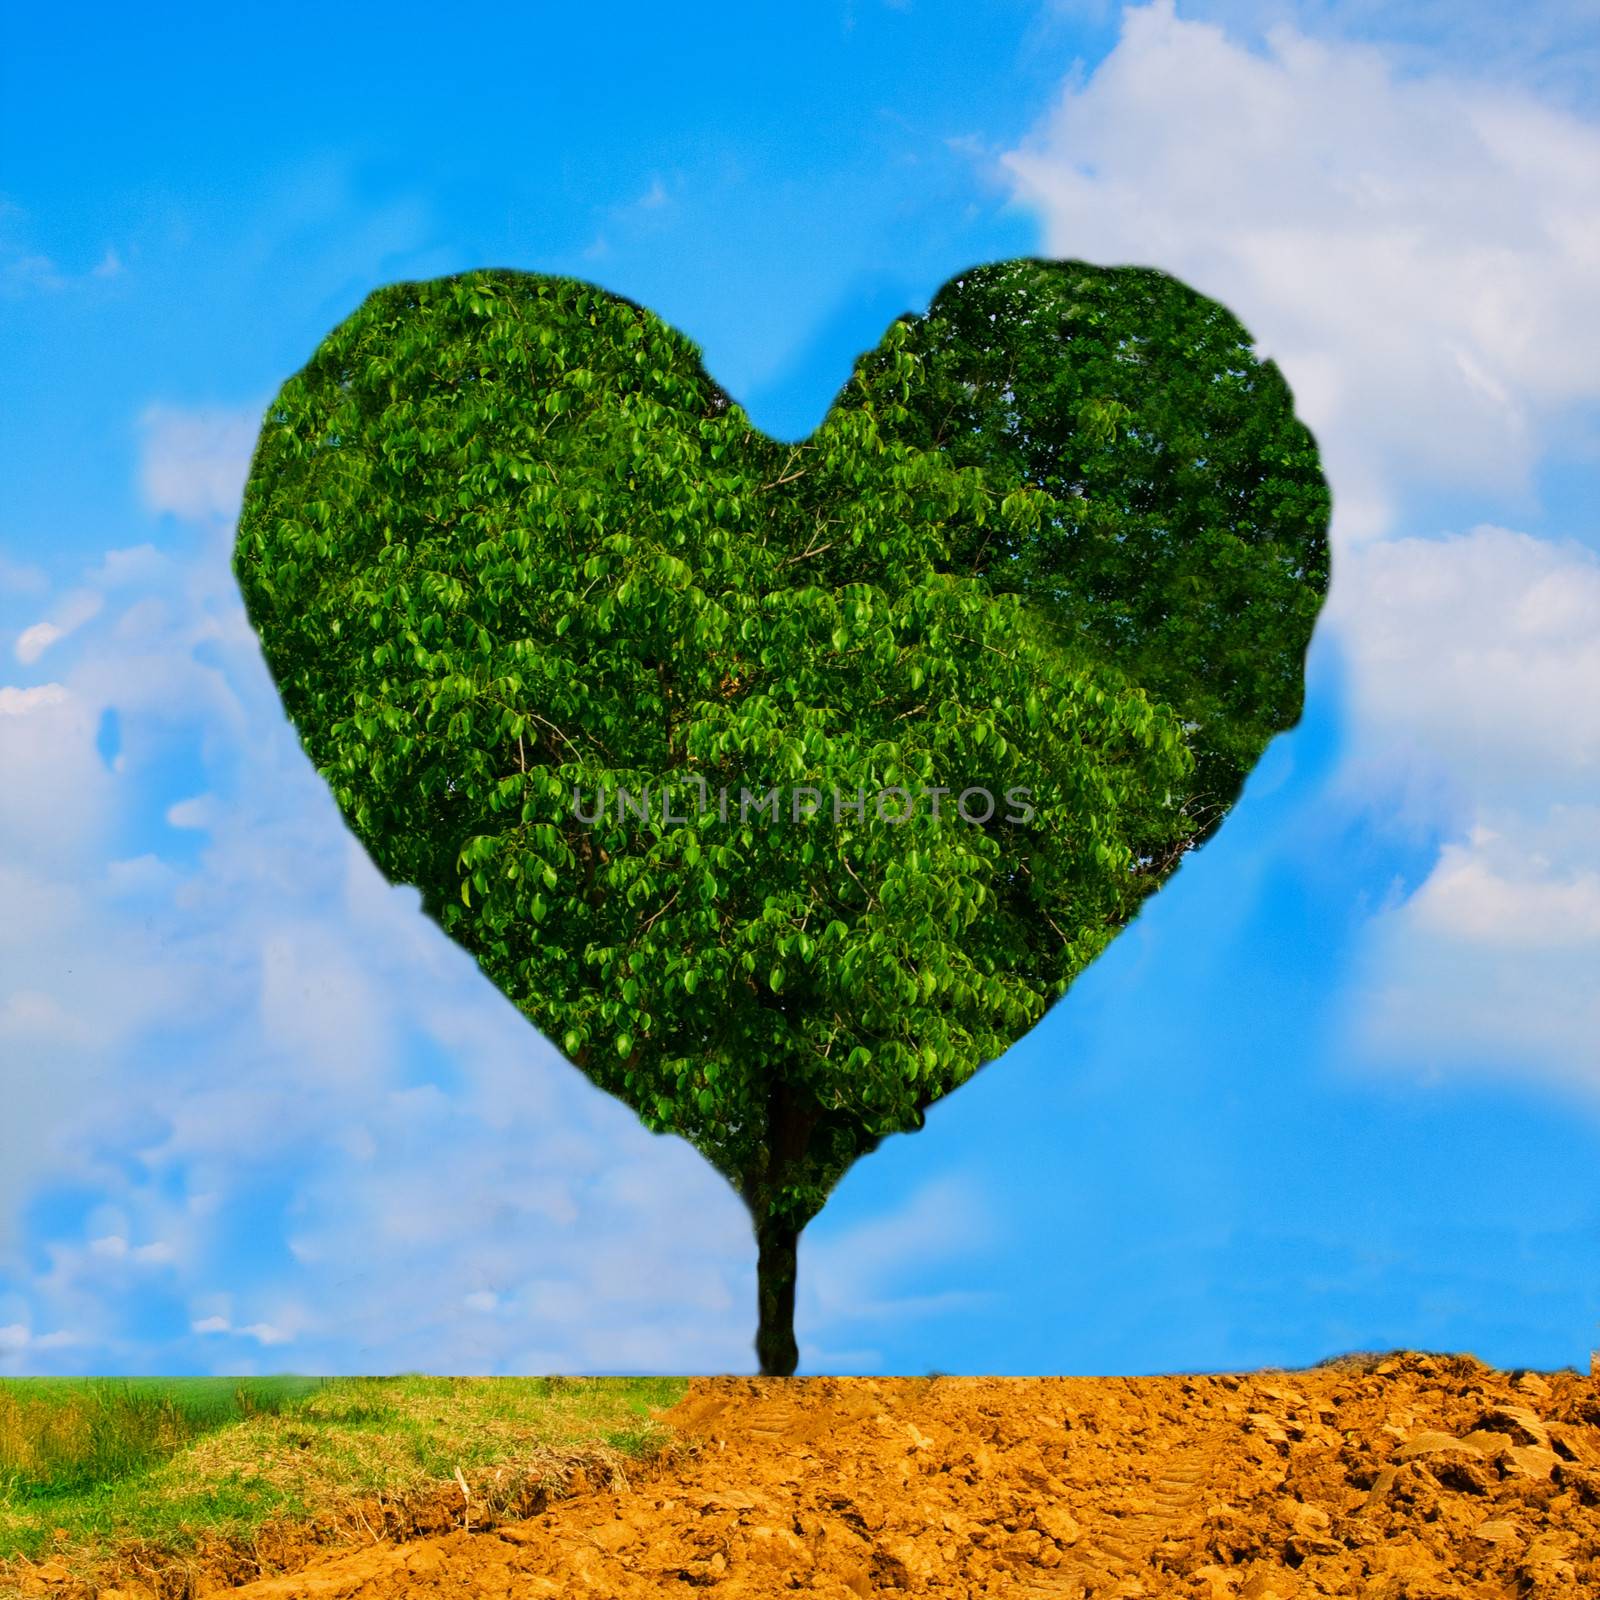 Heart shaped tree by Koufax73